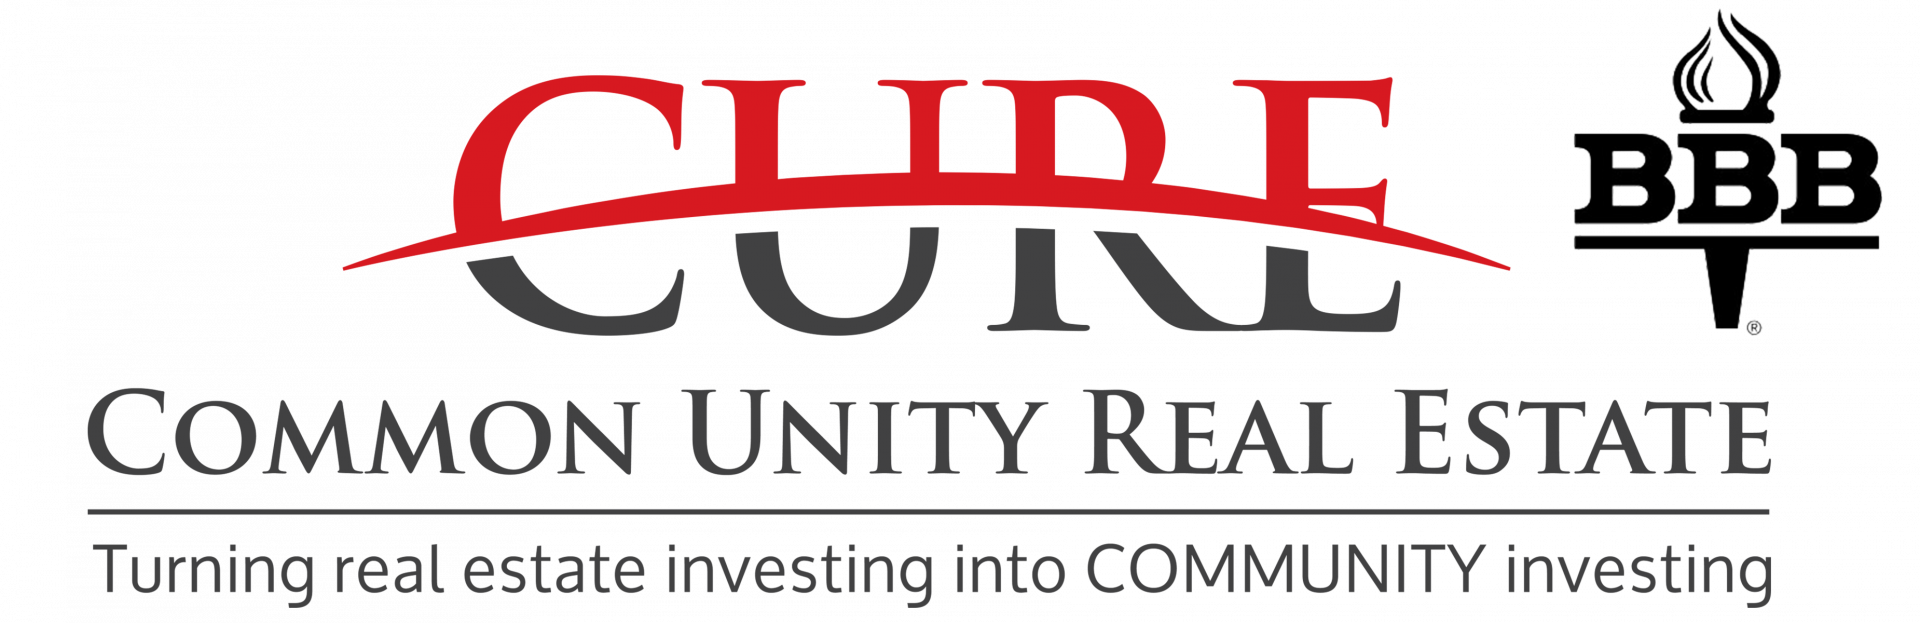 Common Unity Real Estate logo